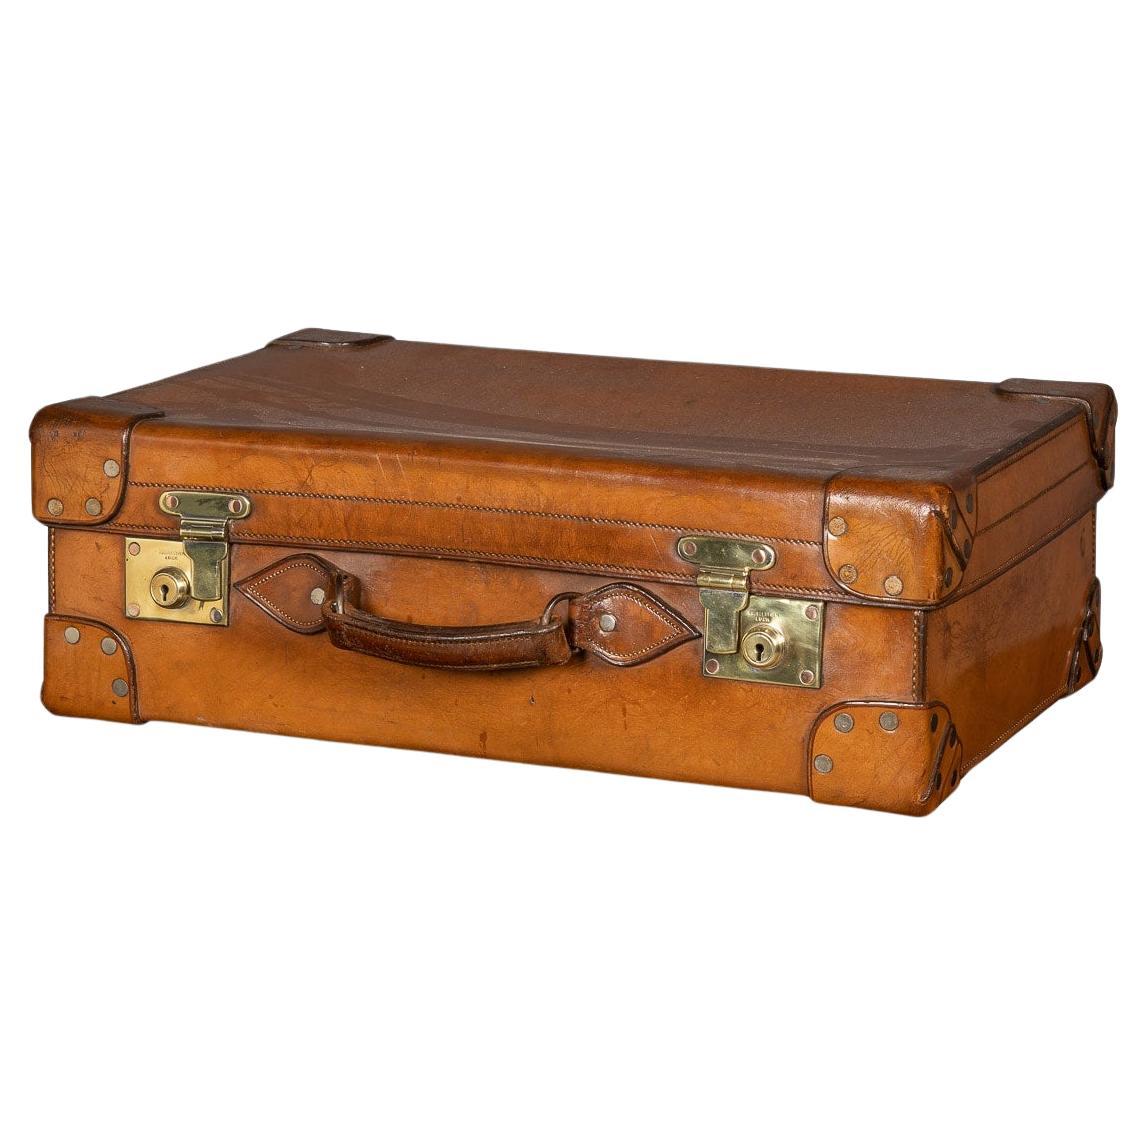 20th Century British Made Bridle Leather Suitcase, c.1910